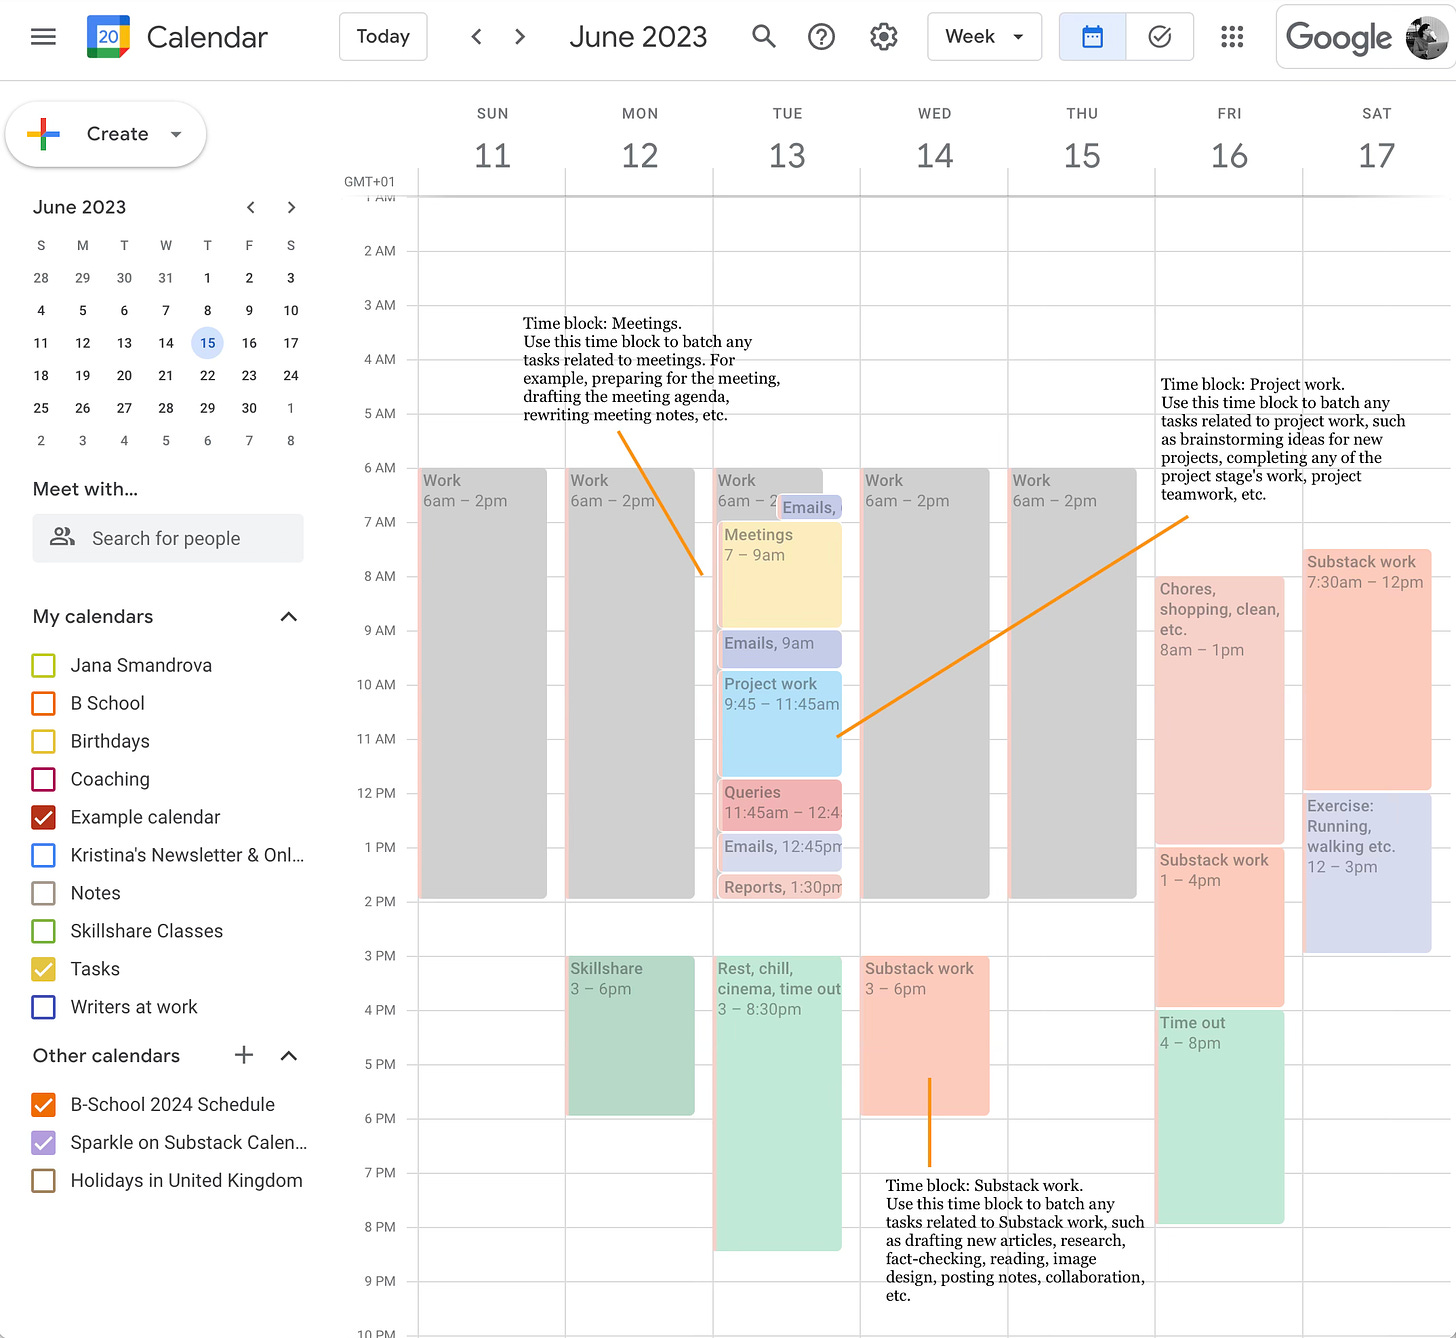 Google calendar demonstrating task batching and time blocking